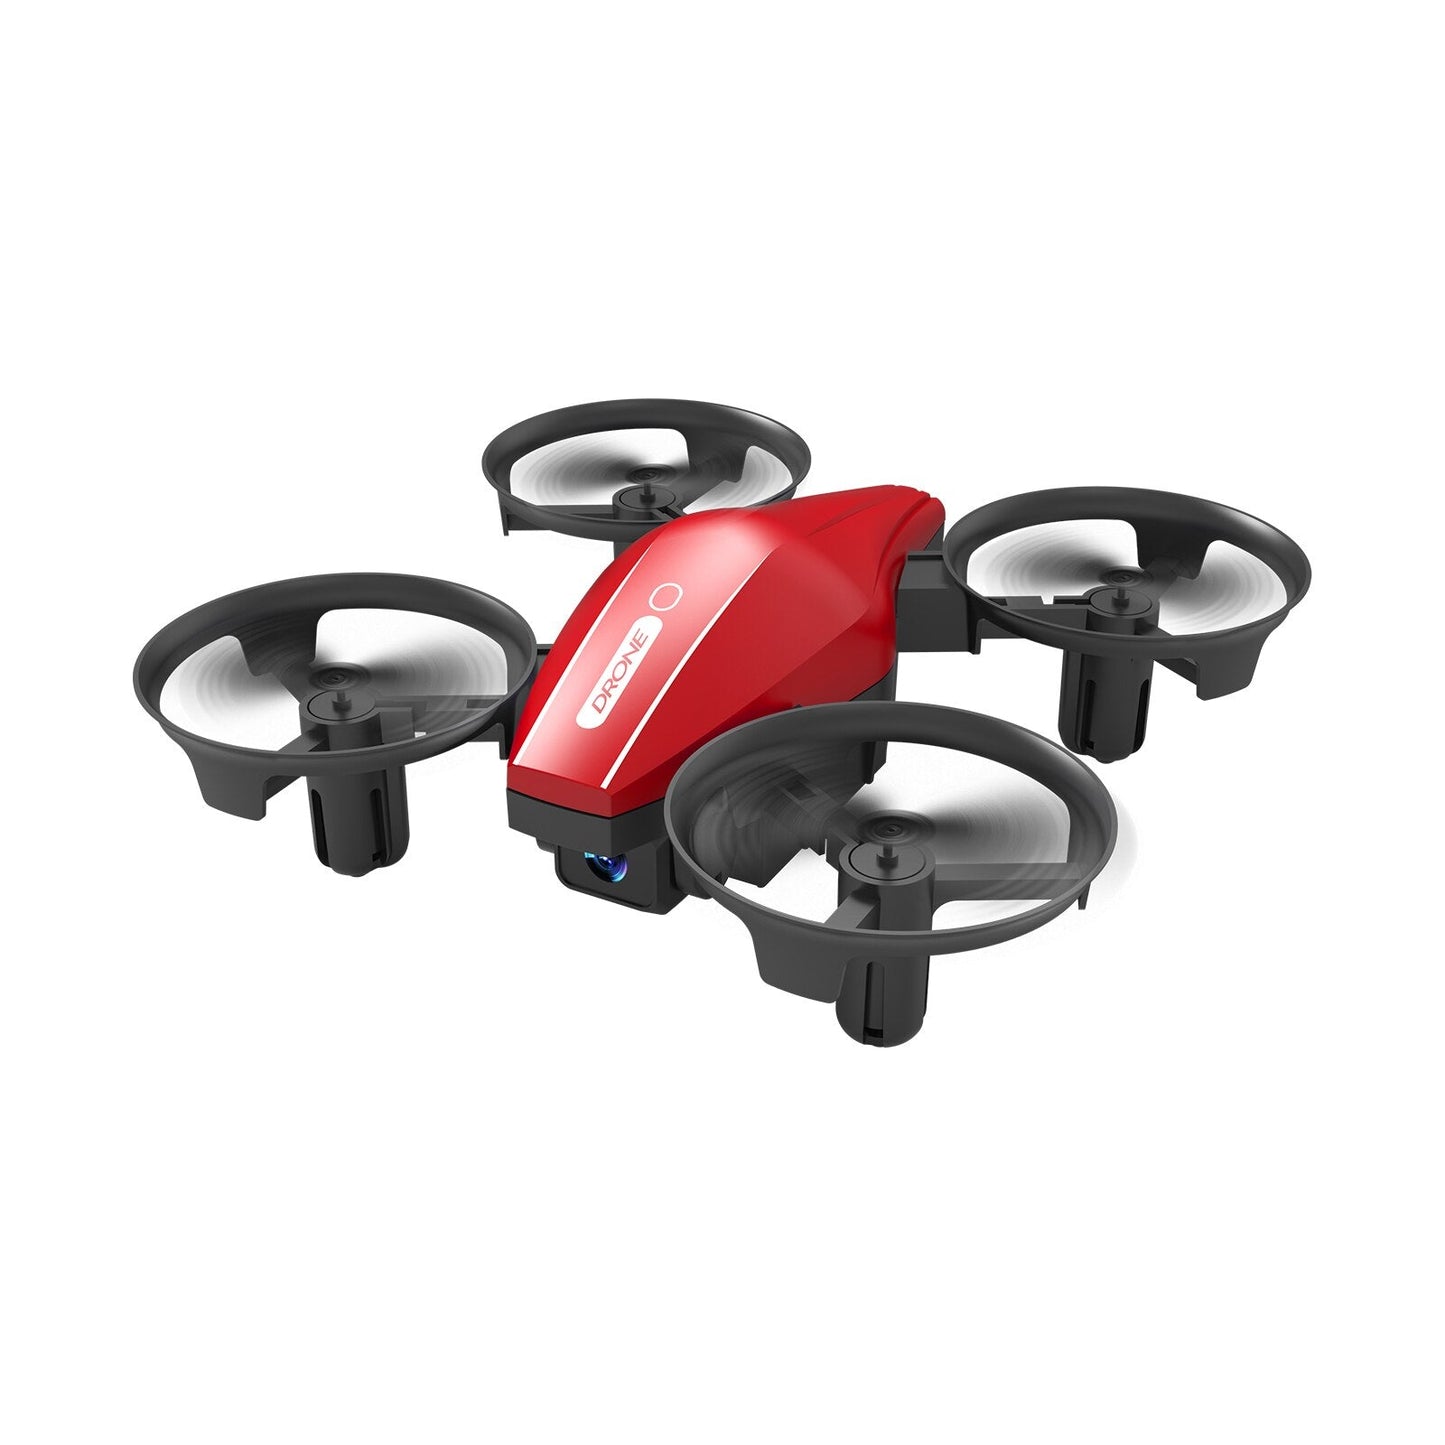 Mini Remote Control Quadcopter with 360 Degree Video Capture